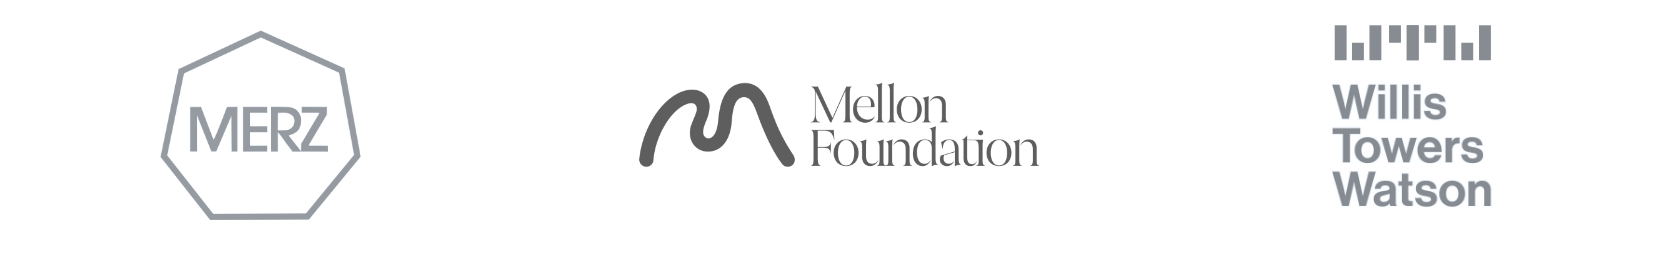 Merz North America, Mellon Foundation, Willis Towers Watson